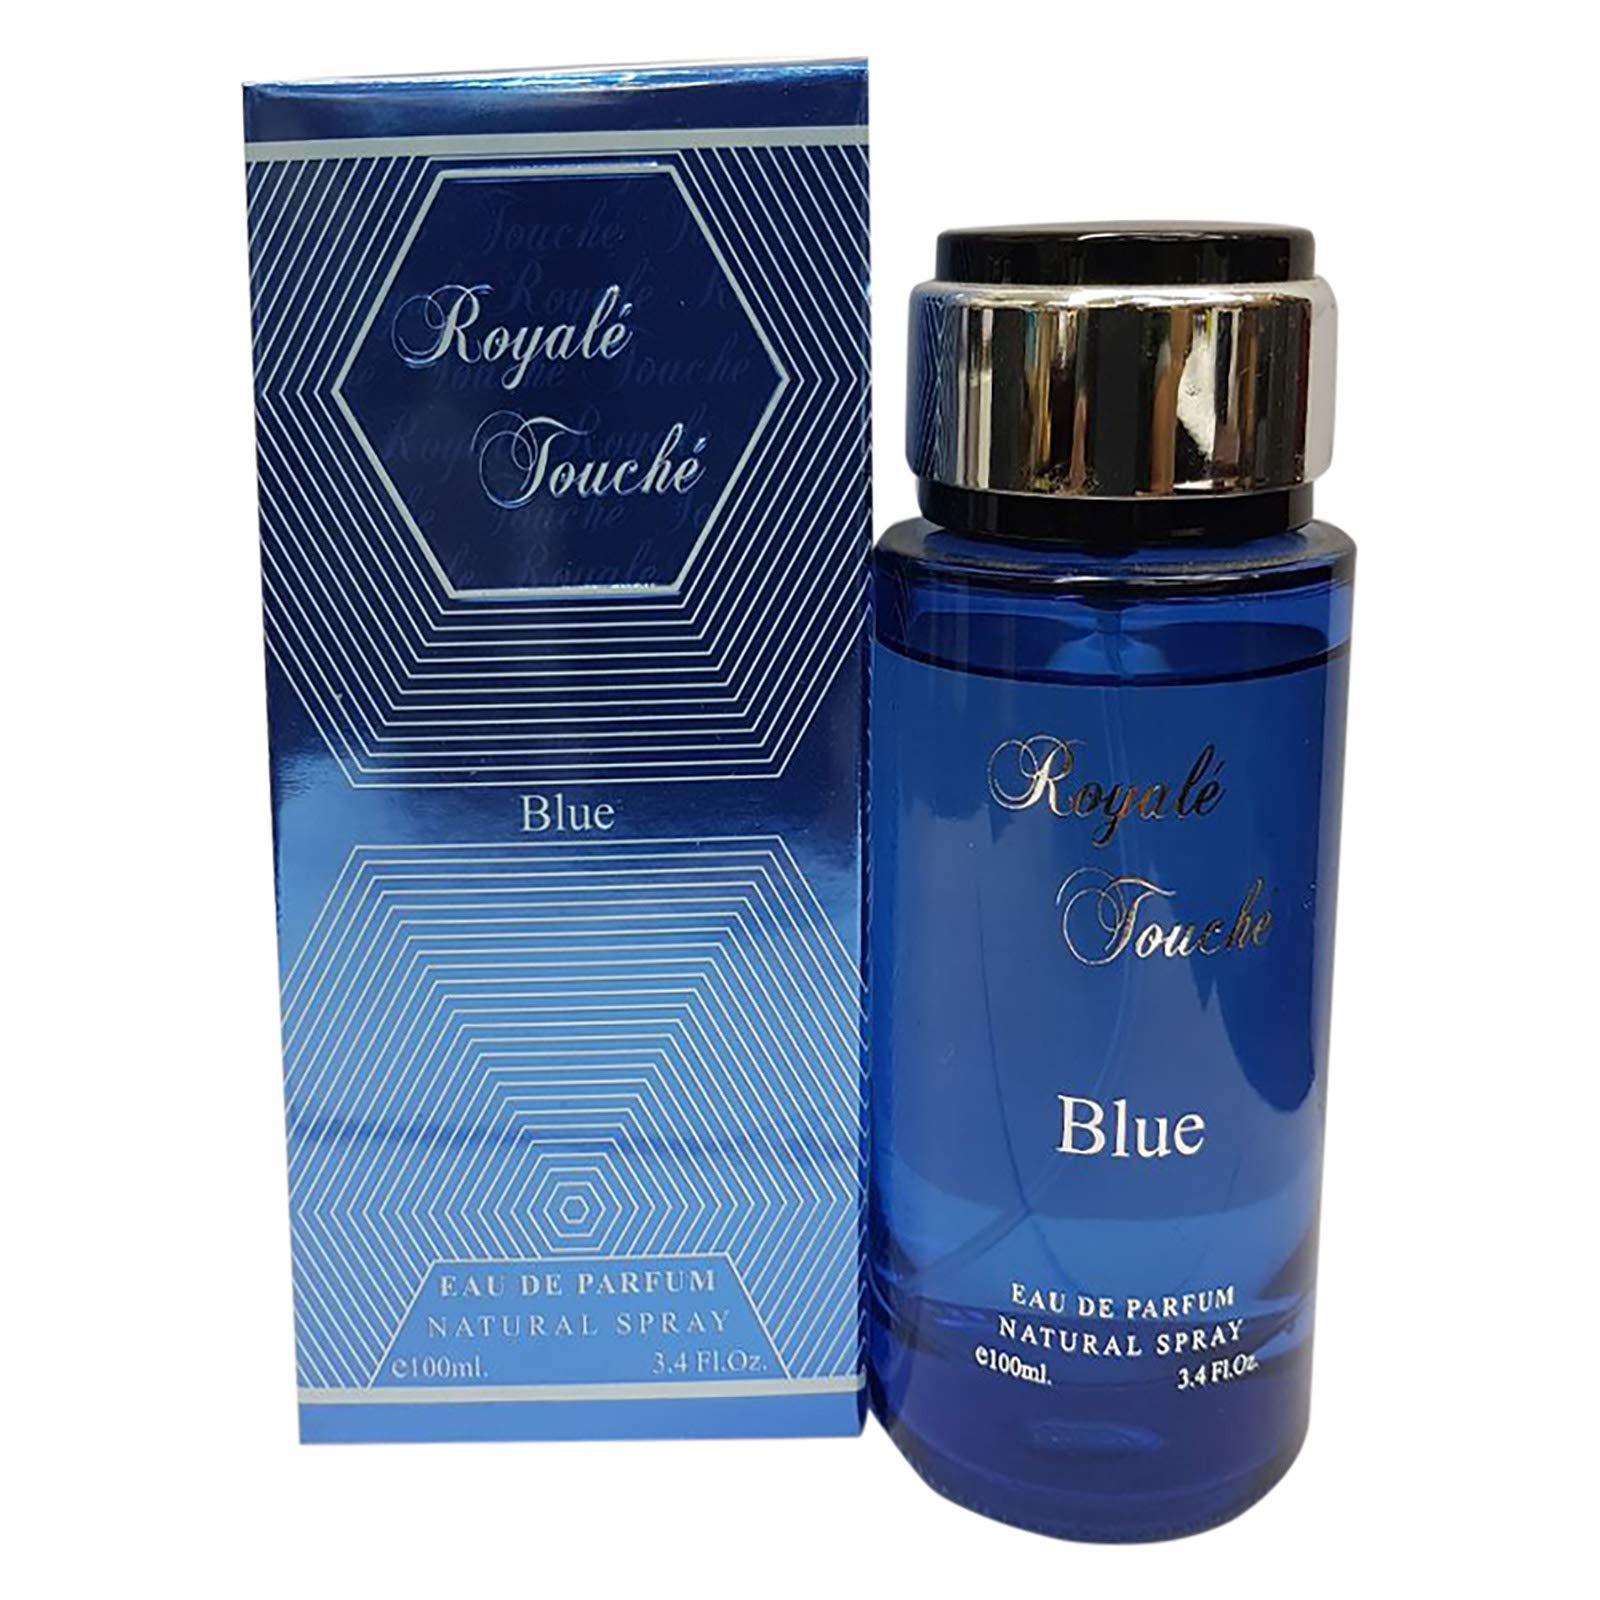 Royal Touch Blue Eau de Parfum 100ml In Pakistan 0300-1300647 - Online Shopping in Pakistan,Lahore,Karachi,Islamabad,Bahawalpur,Peshawar,Multan,Rawalpindi - LikeShopping.Pk